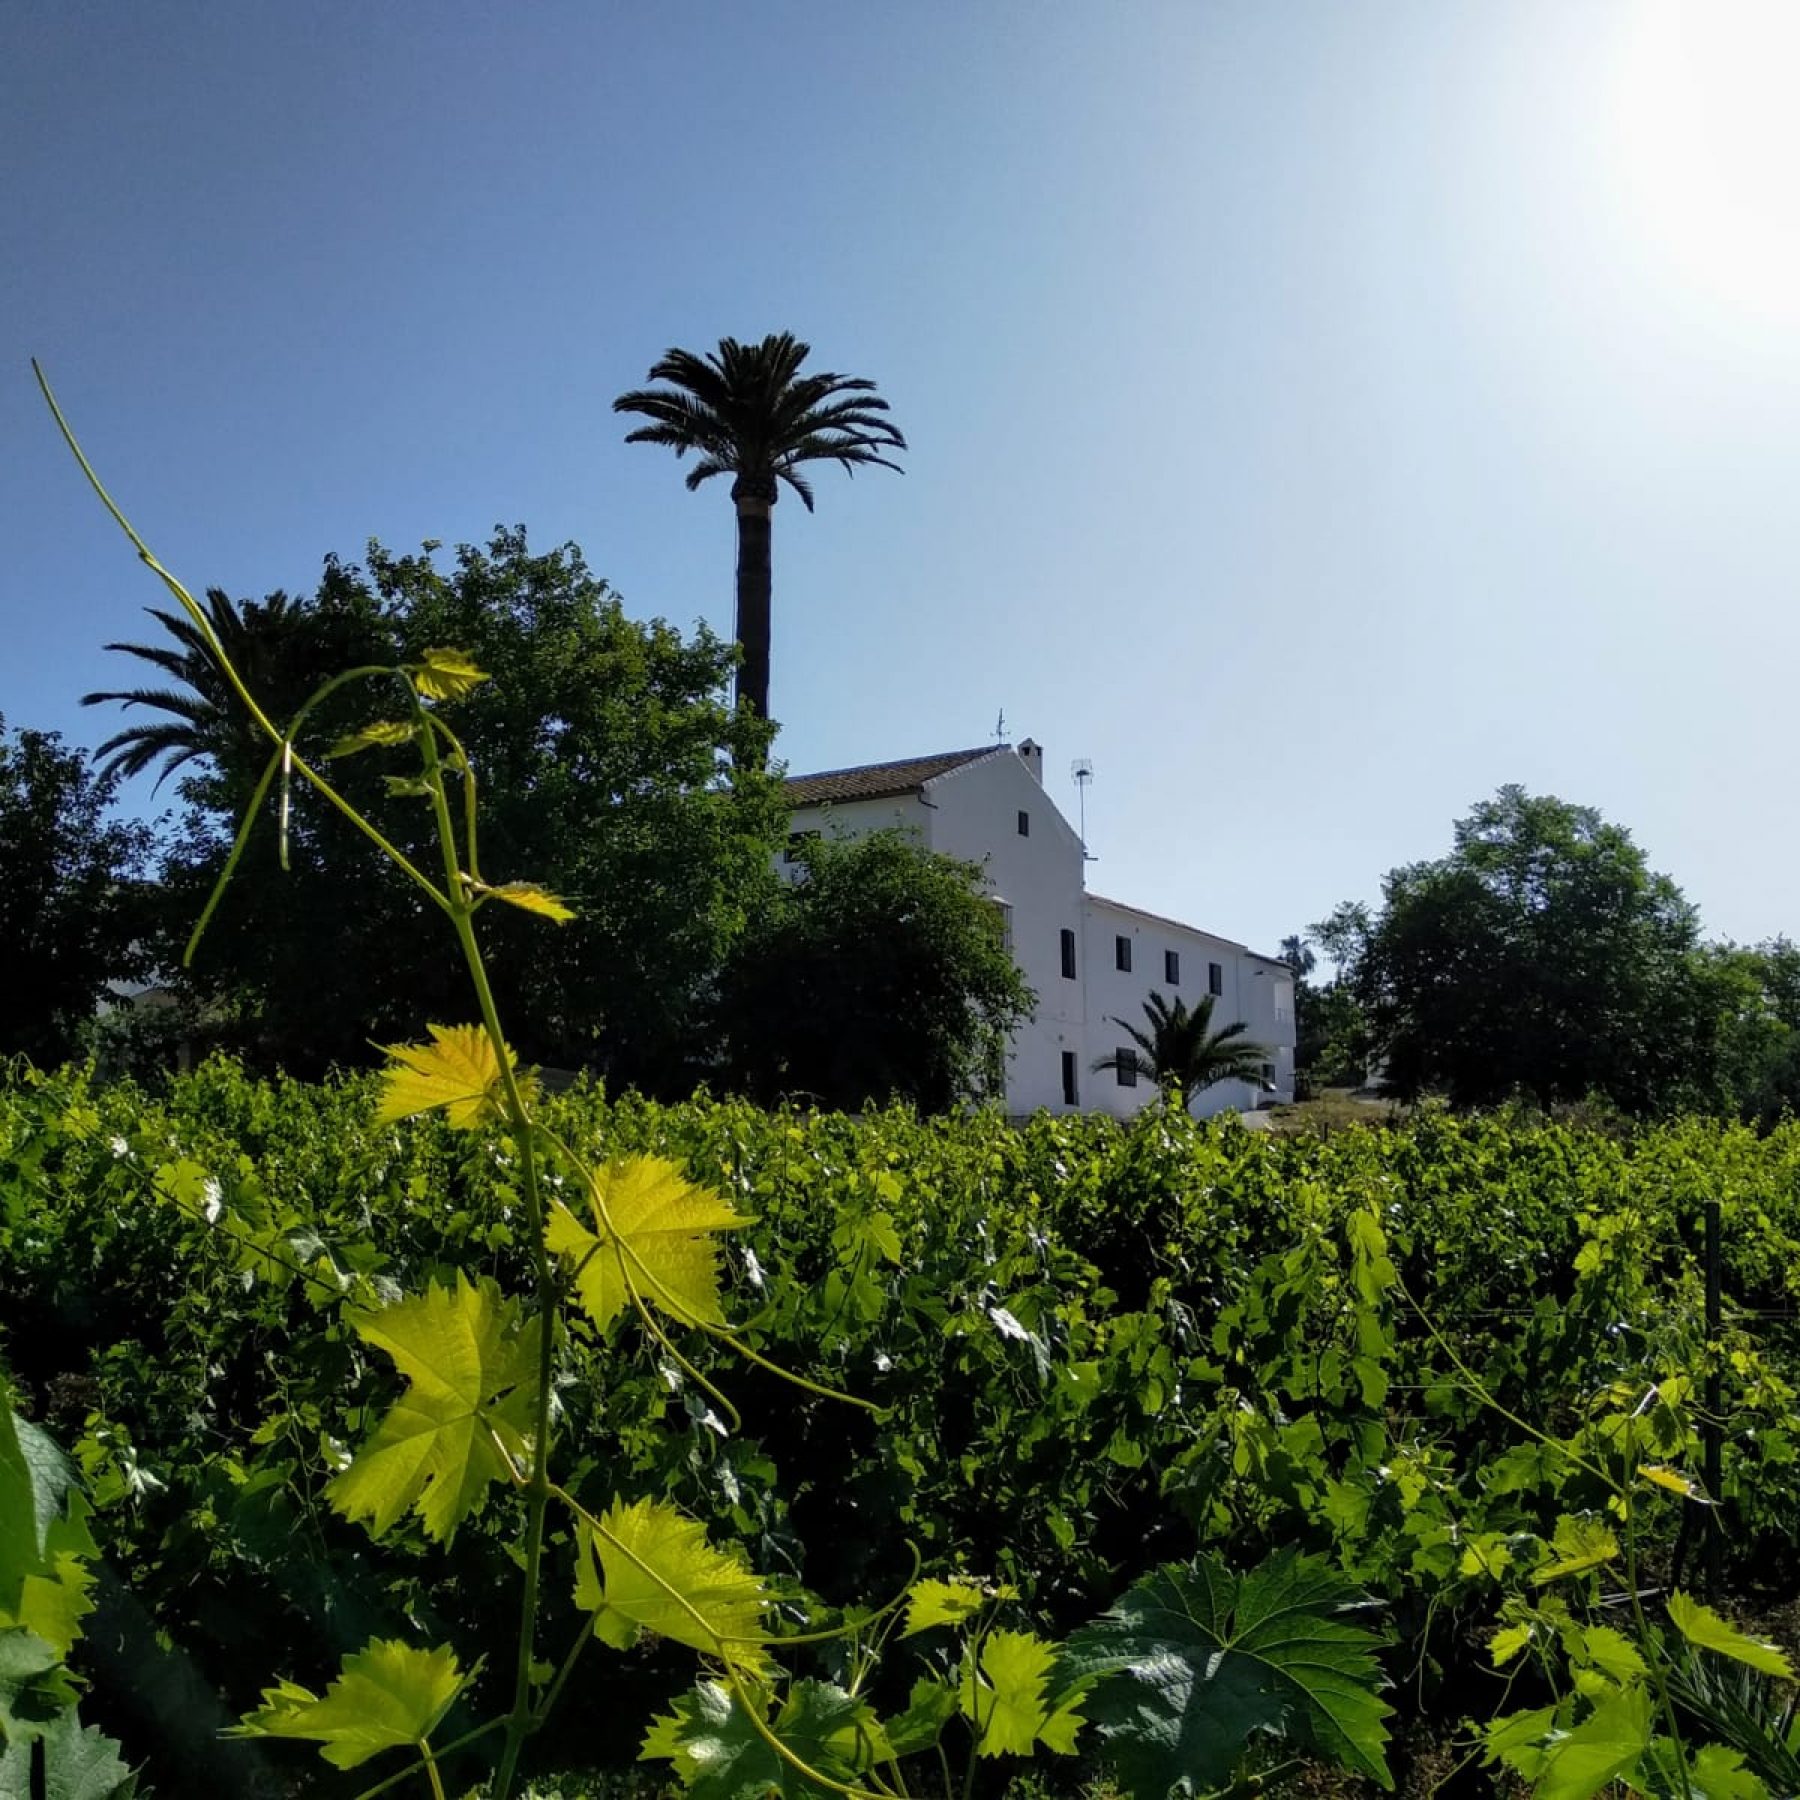 Visita a finca de olivares y viñedos Nava de Silpia, Lucena